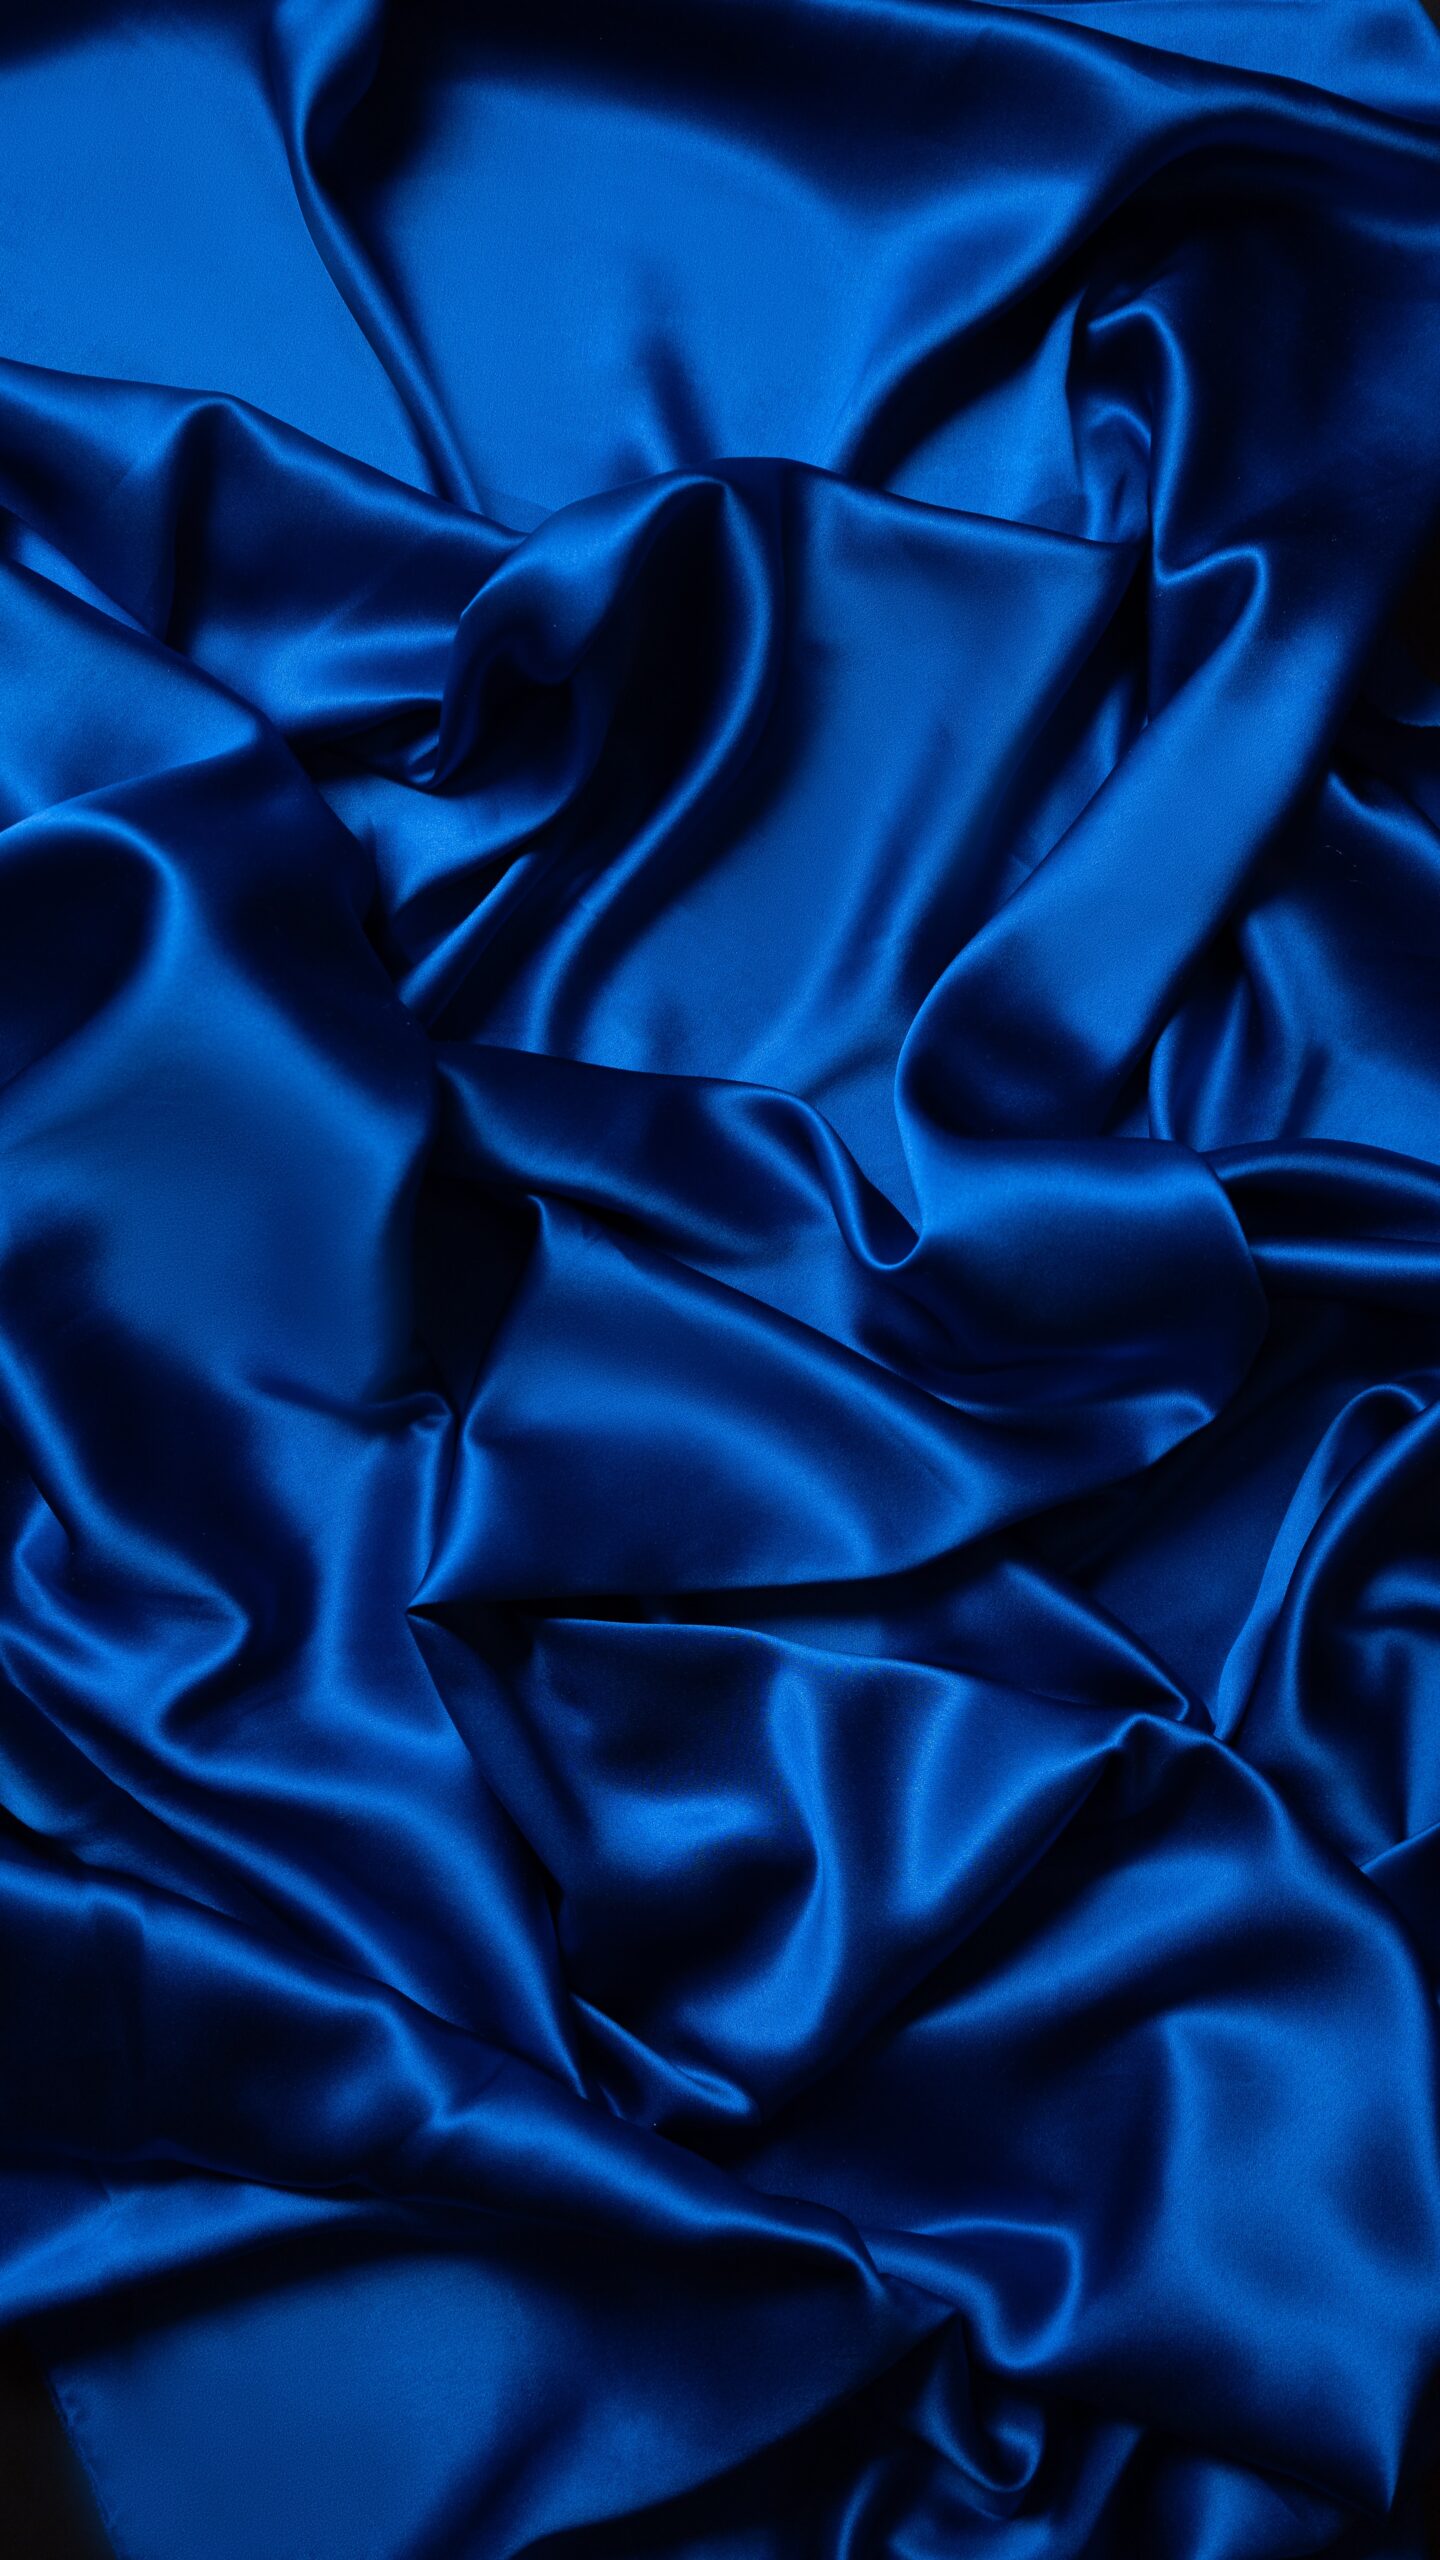 A blue silk fabric surface